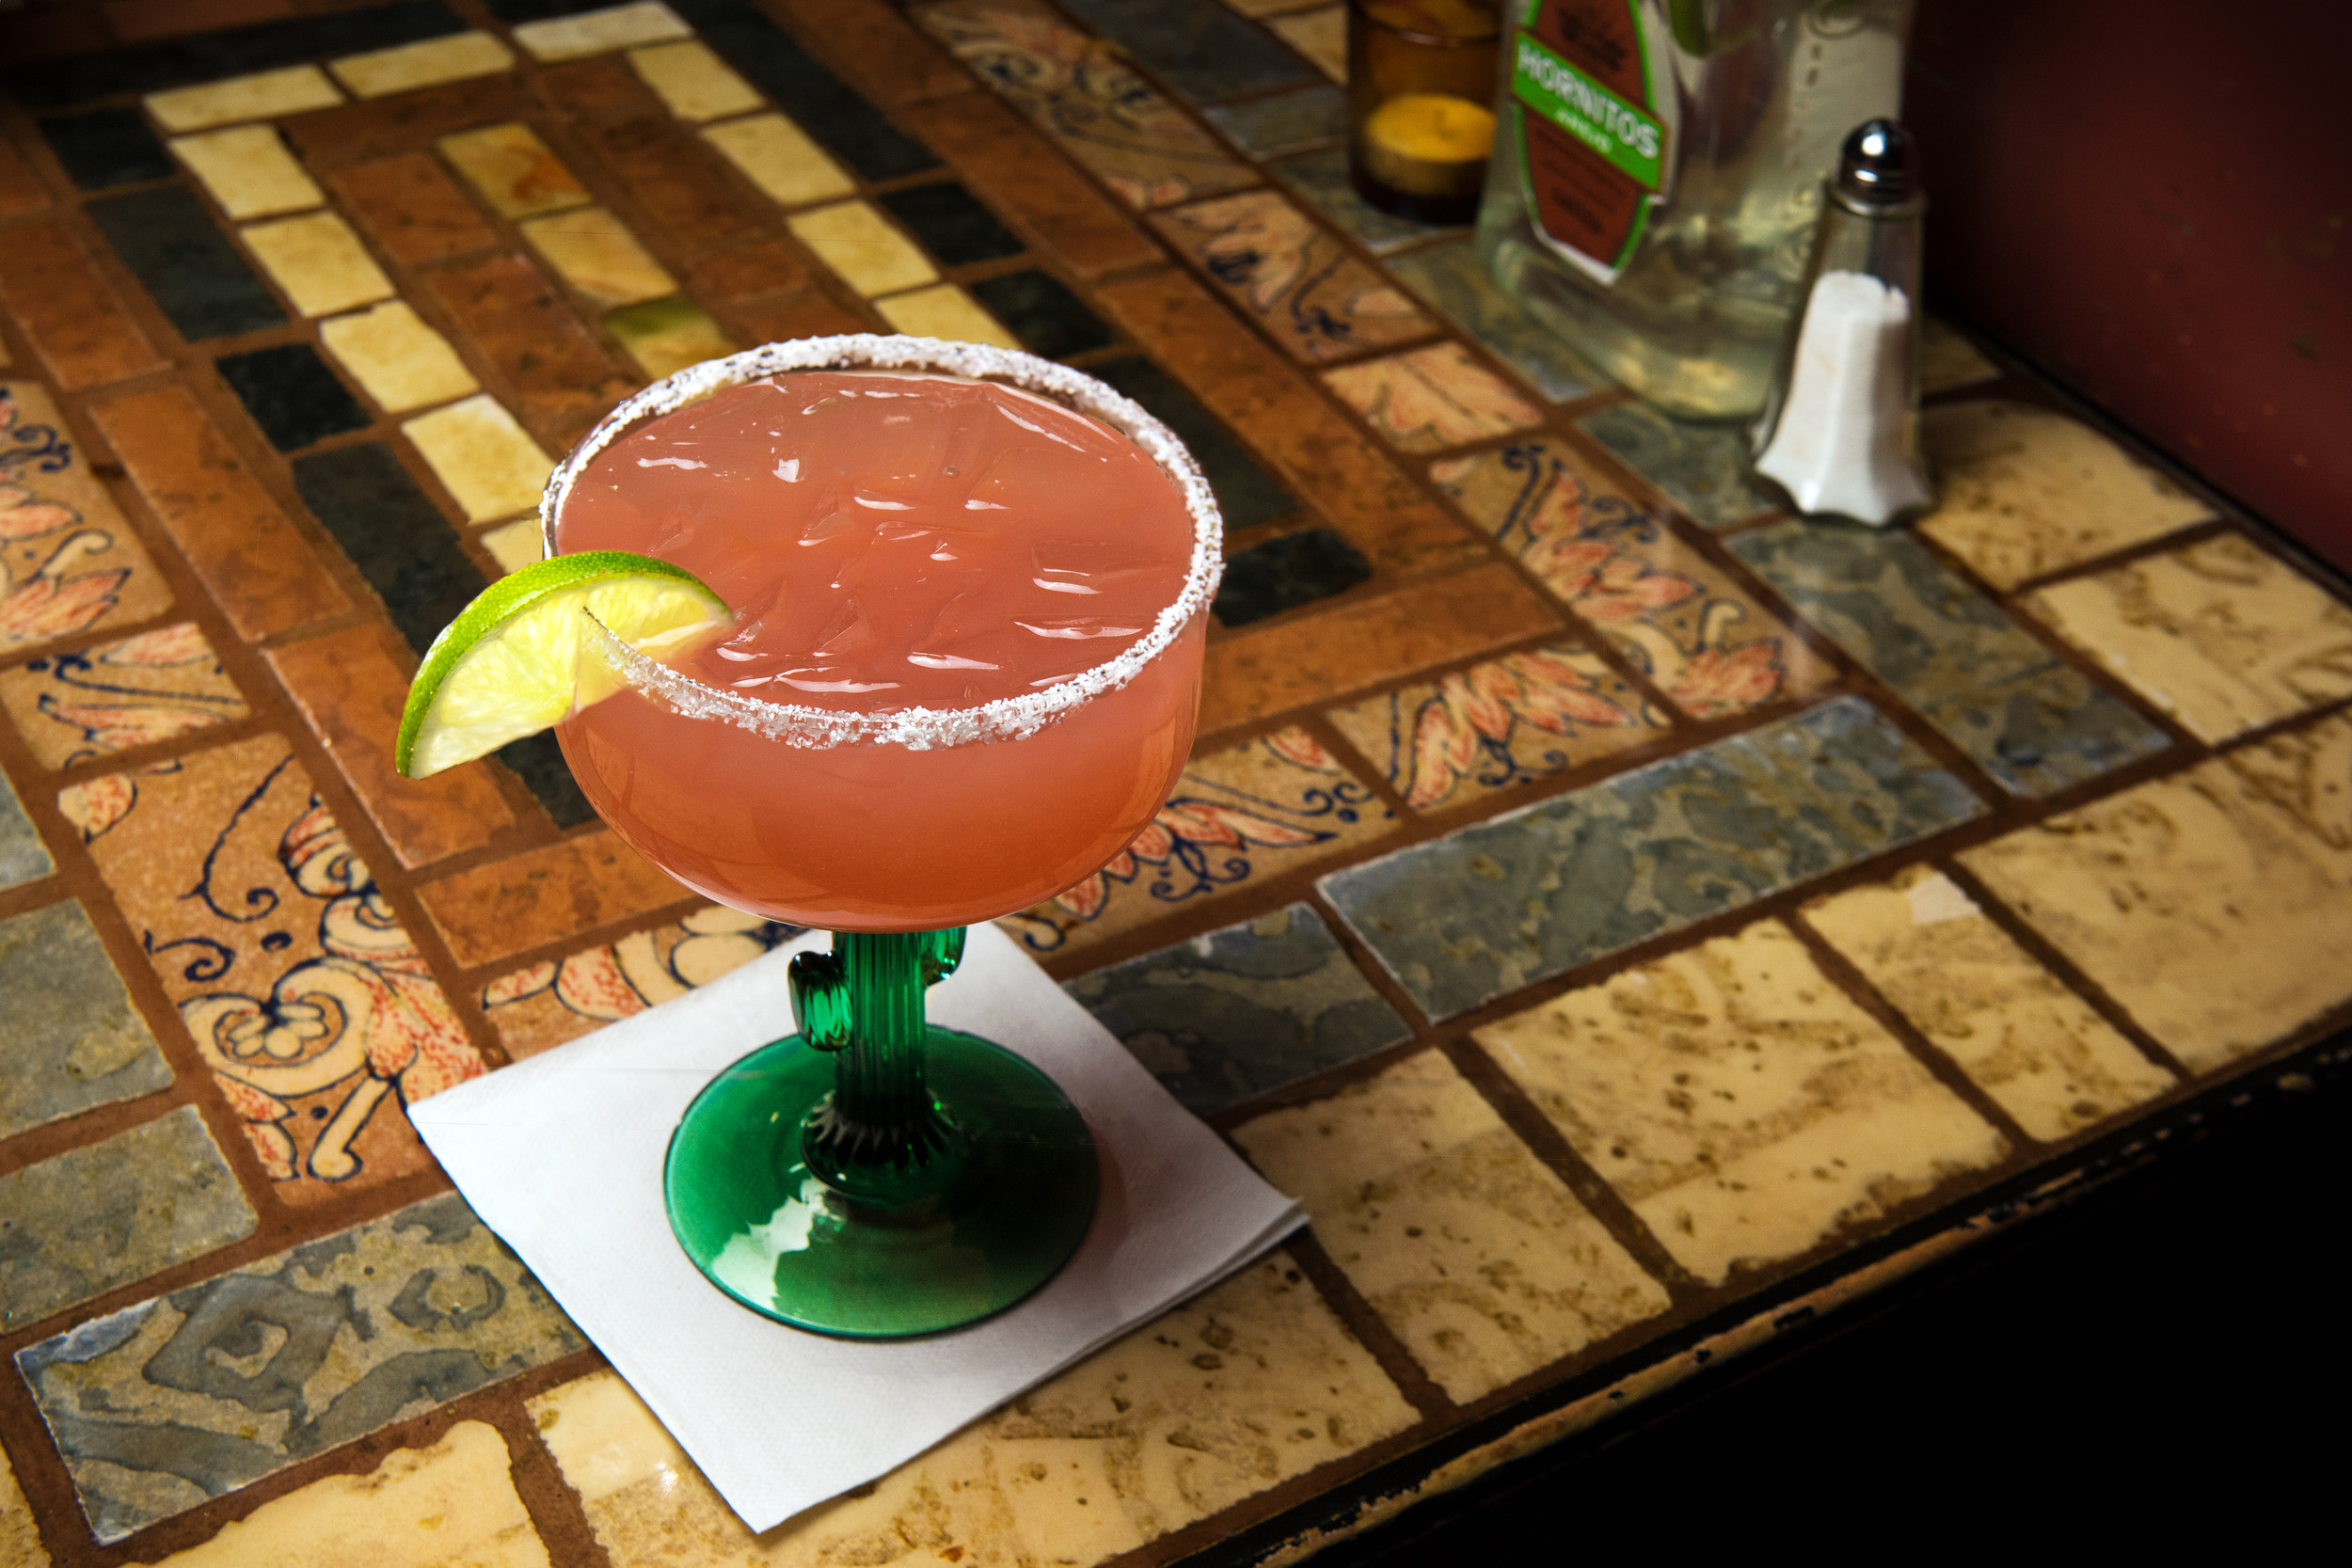 The off-menu "mezcalrita" at Don Jose Tequilas balances smoky mezcal with fresh lime juice